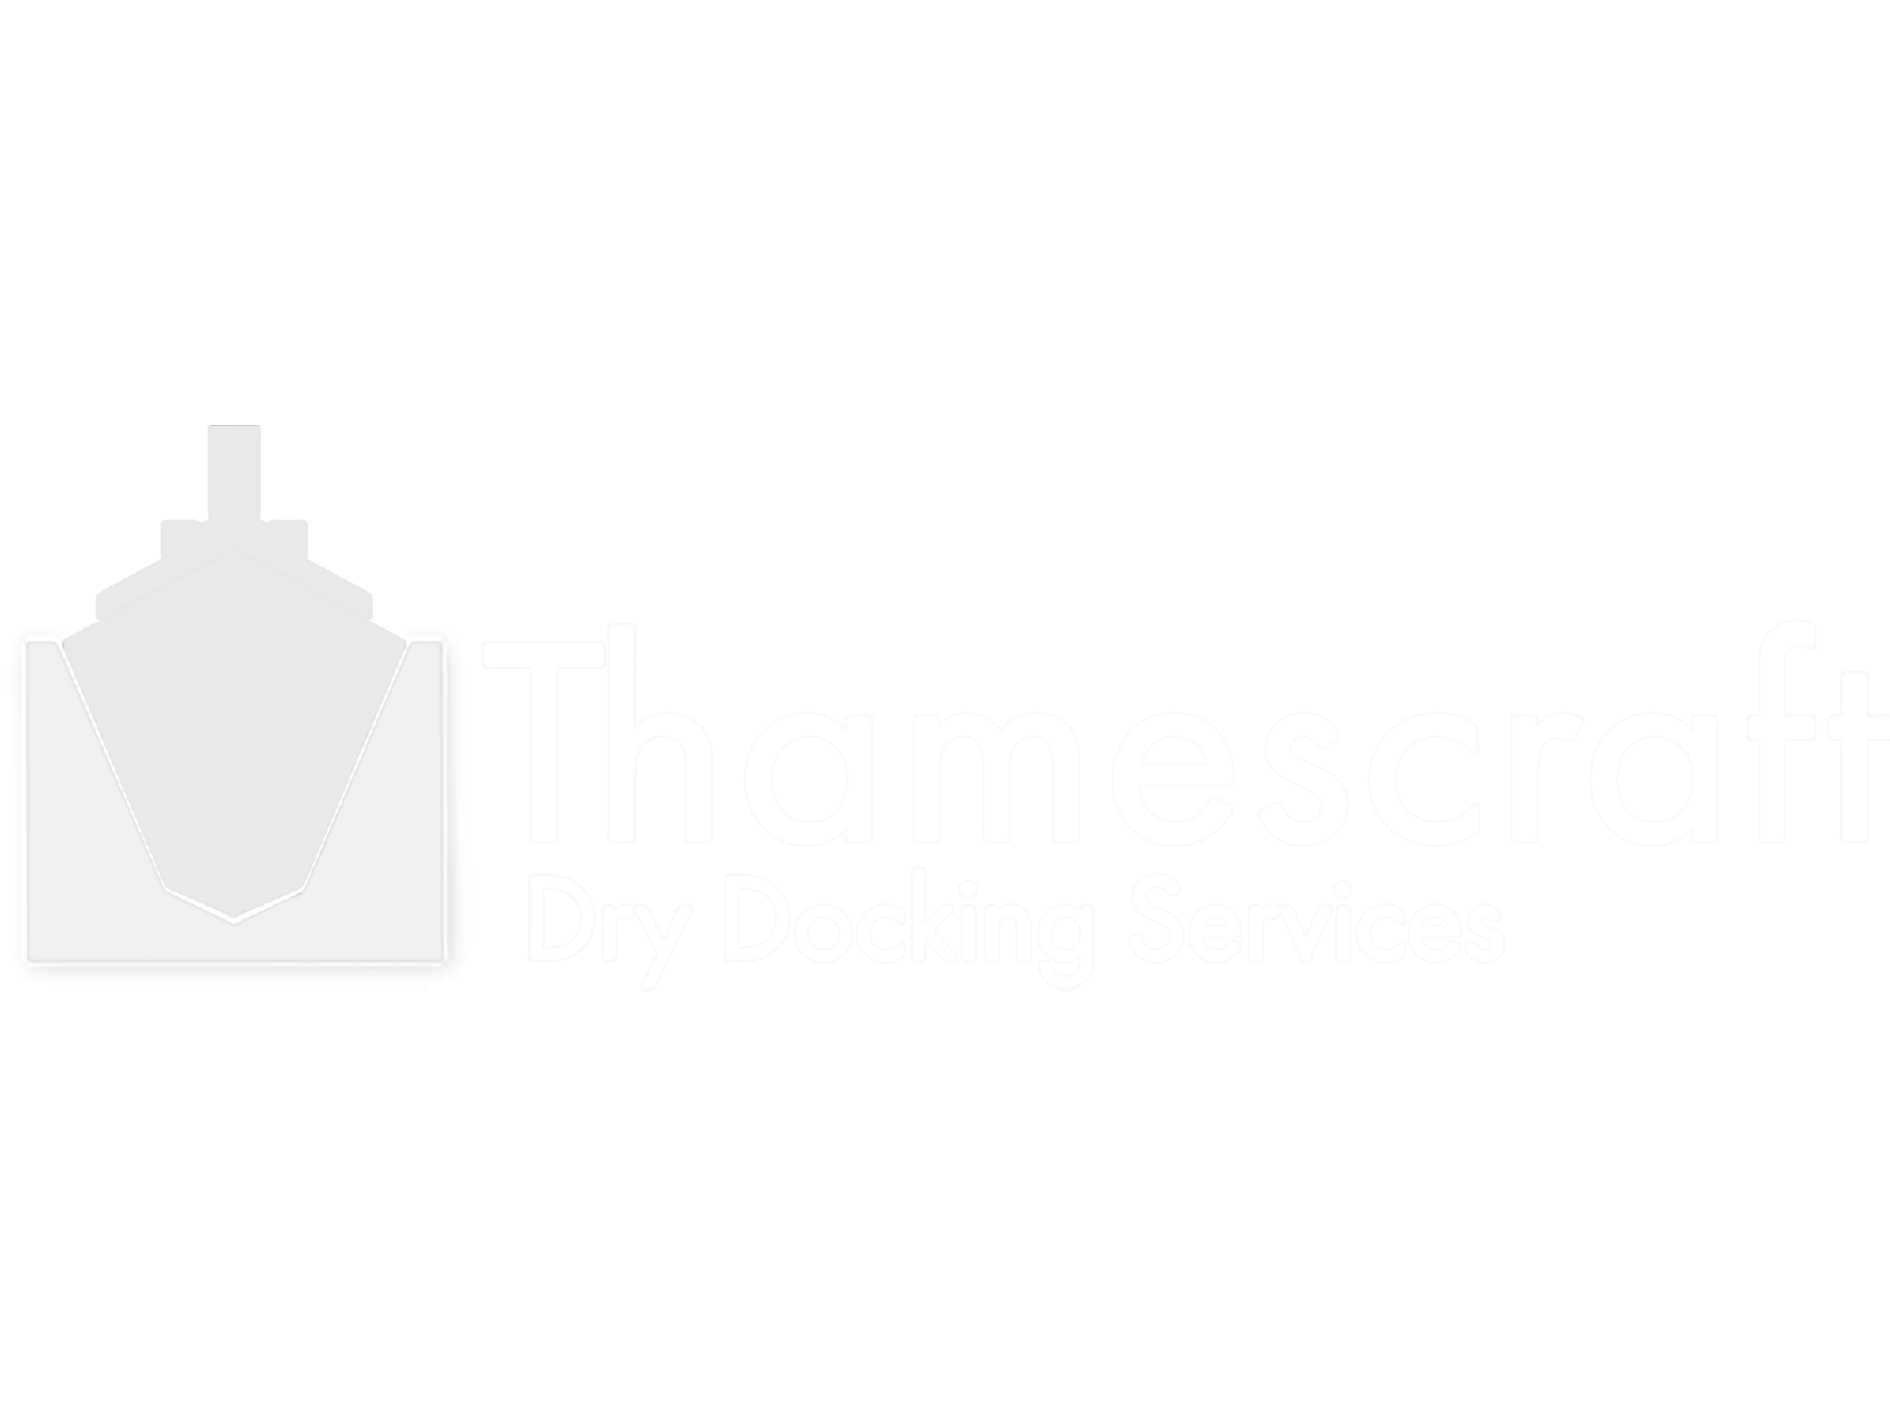 Thamescraft Dry Docking